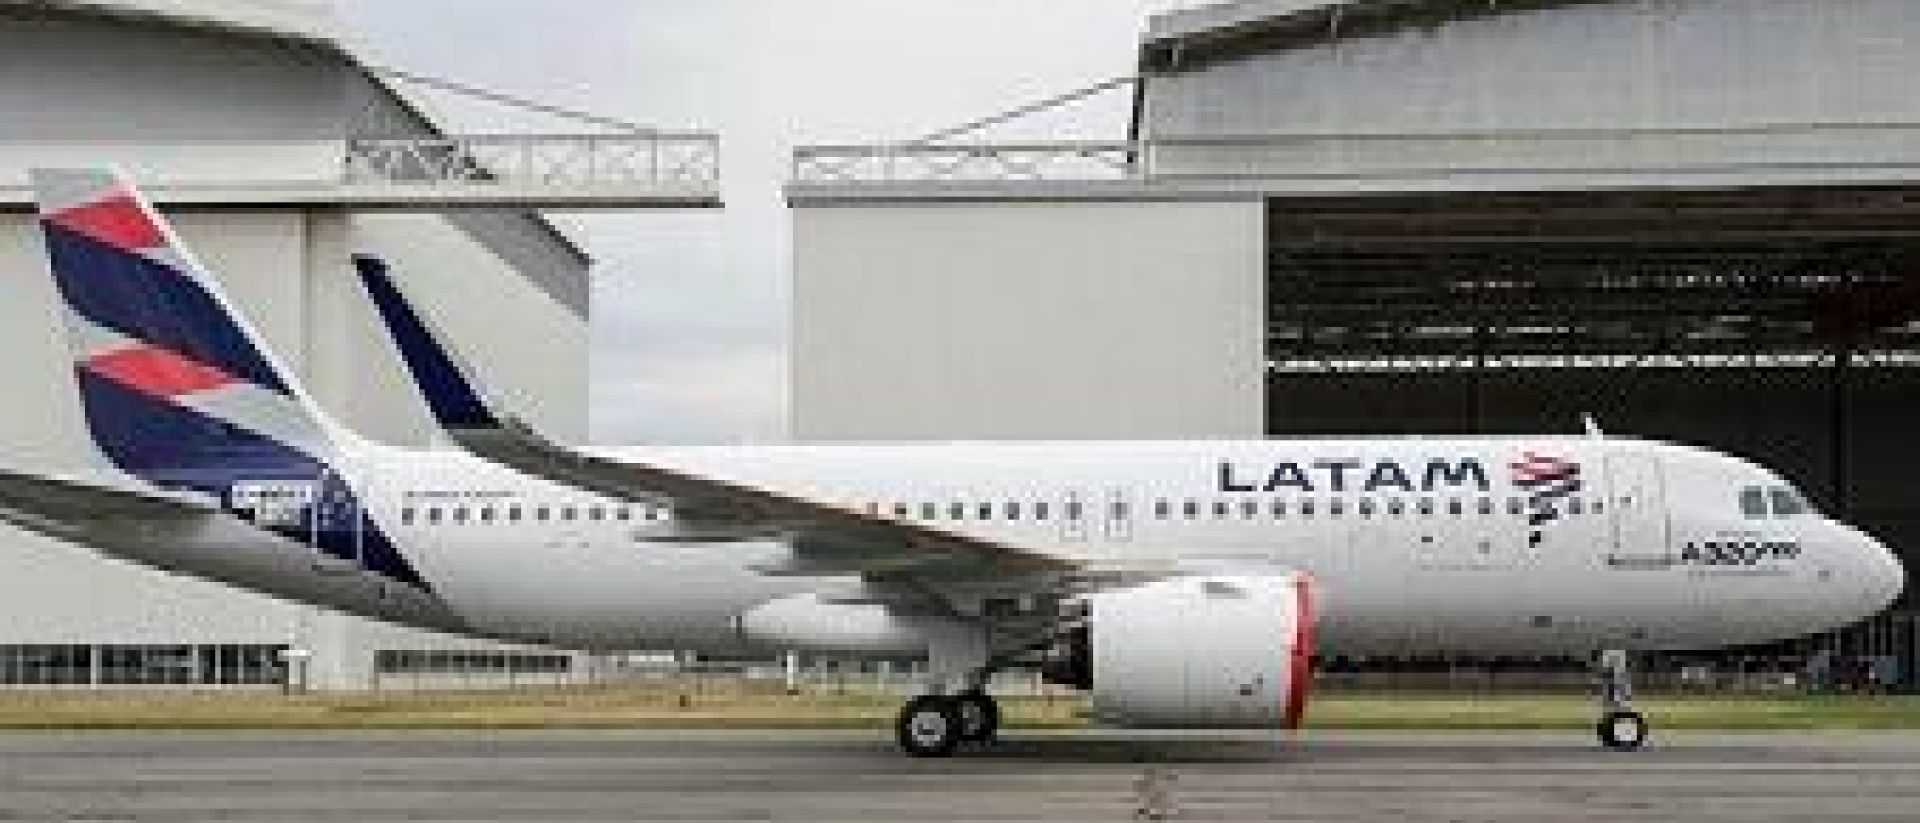 Evacúan un avión de Latam en Iquique por aviso de bomba